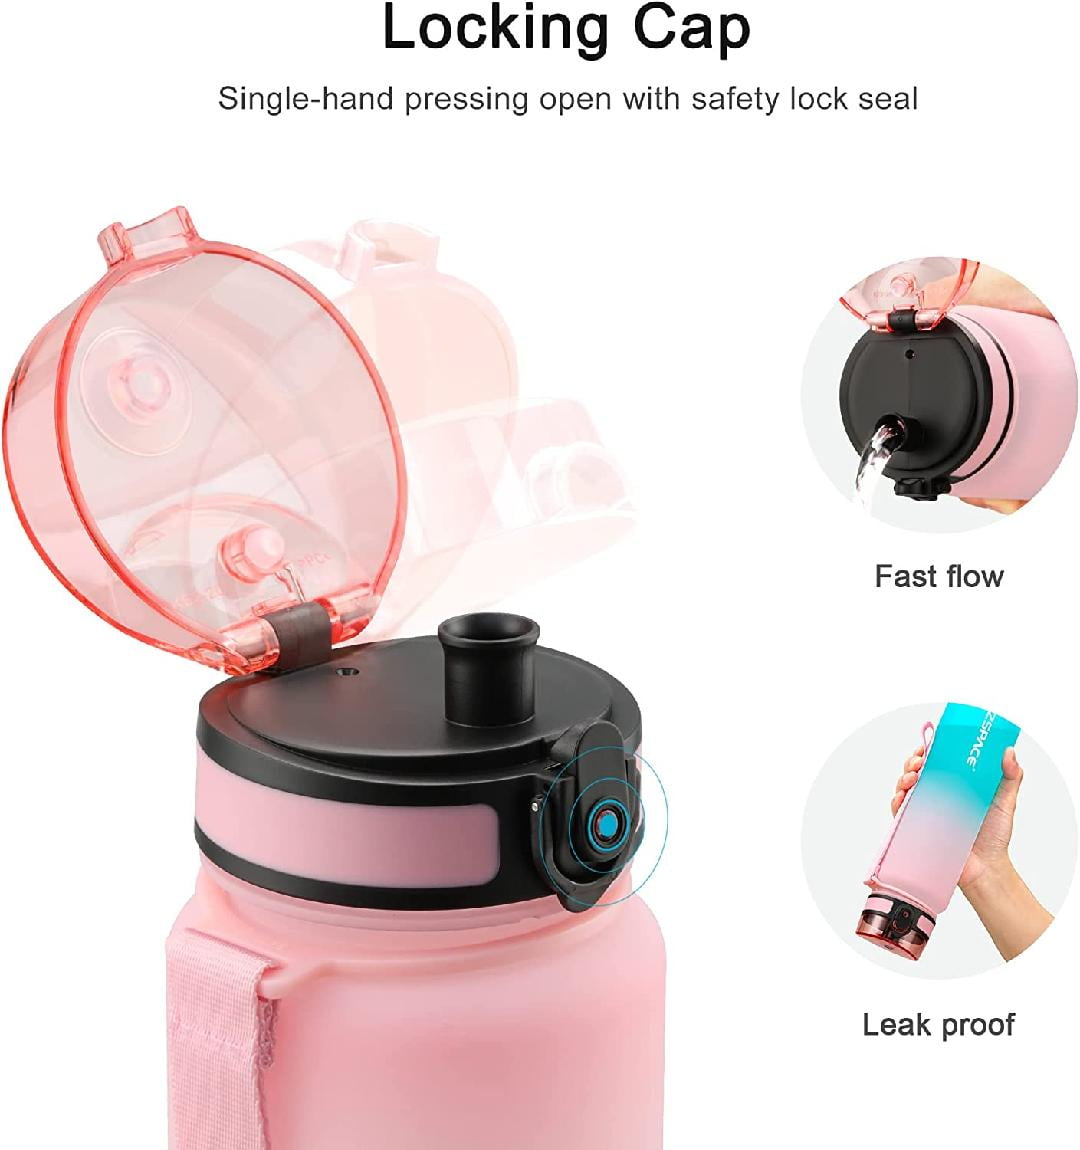 Pink Water bottles with Locking Lid, Travel water bottle,Water bottle with  straw,Plastic water bottl…See more Pink Water bottles with Locking Lid